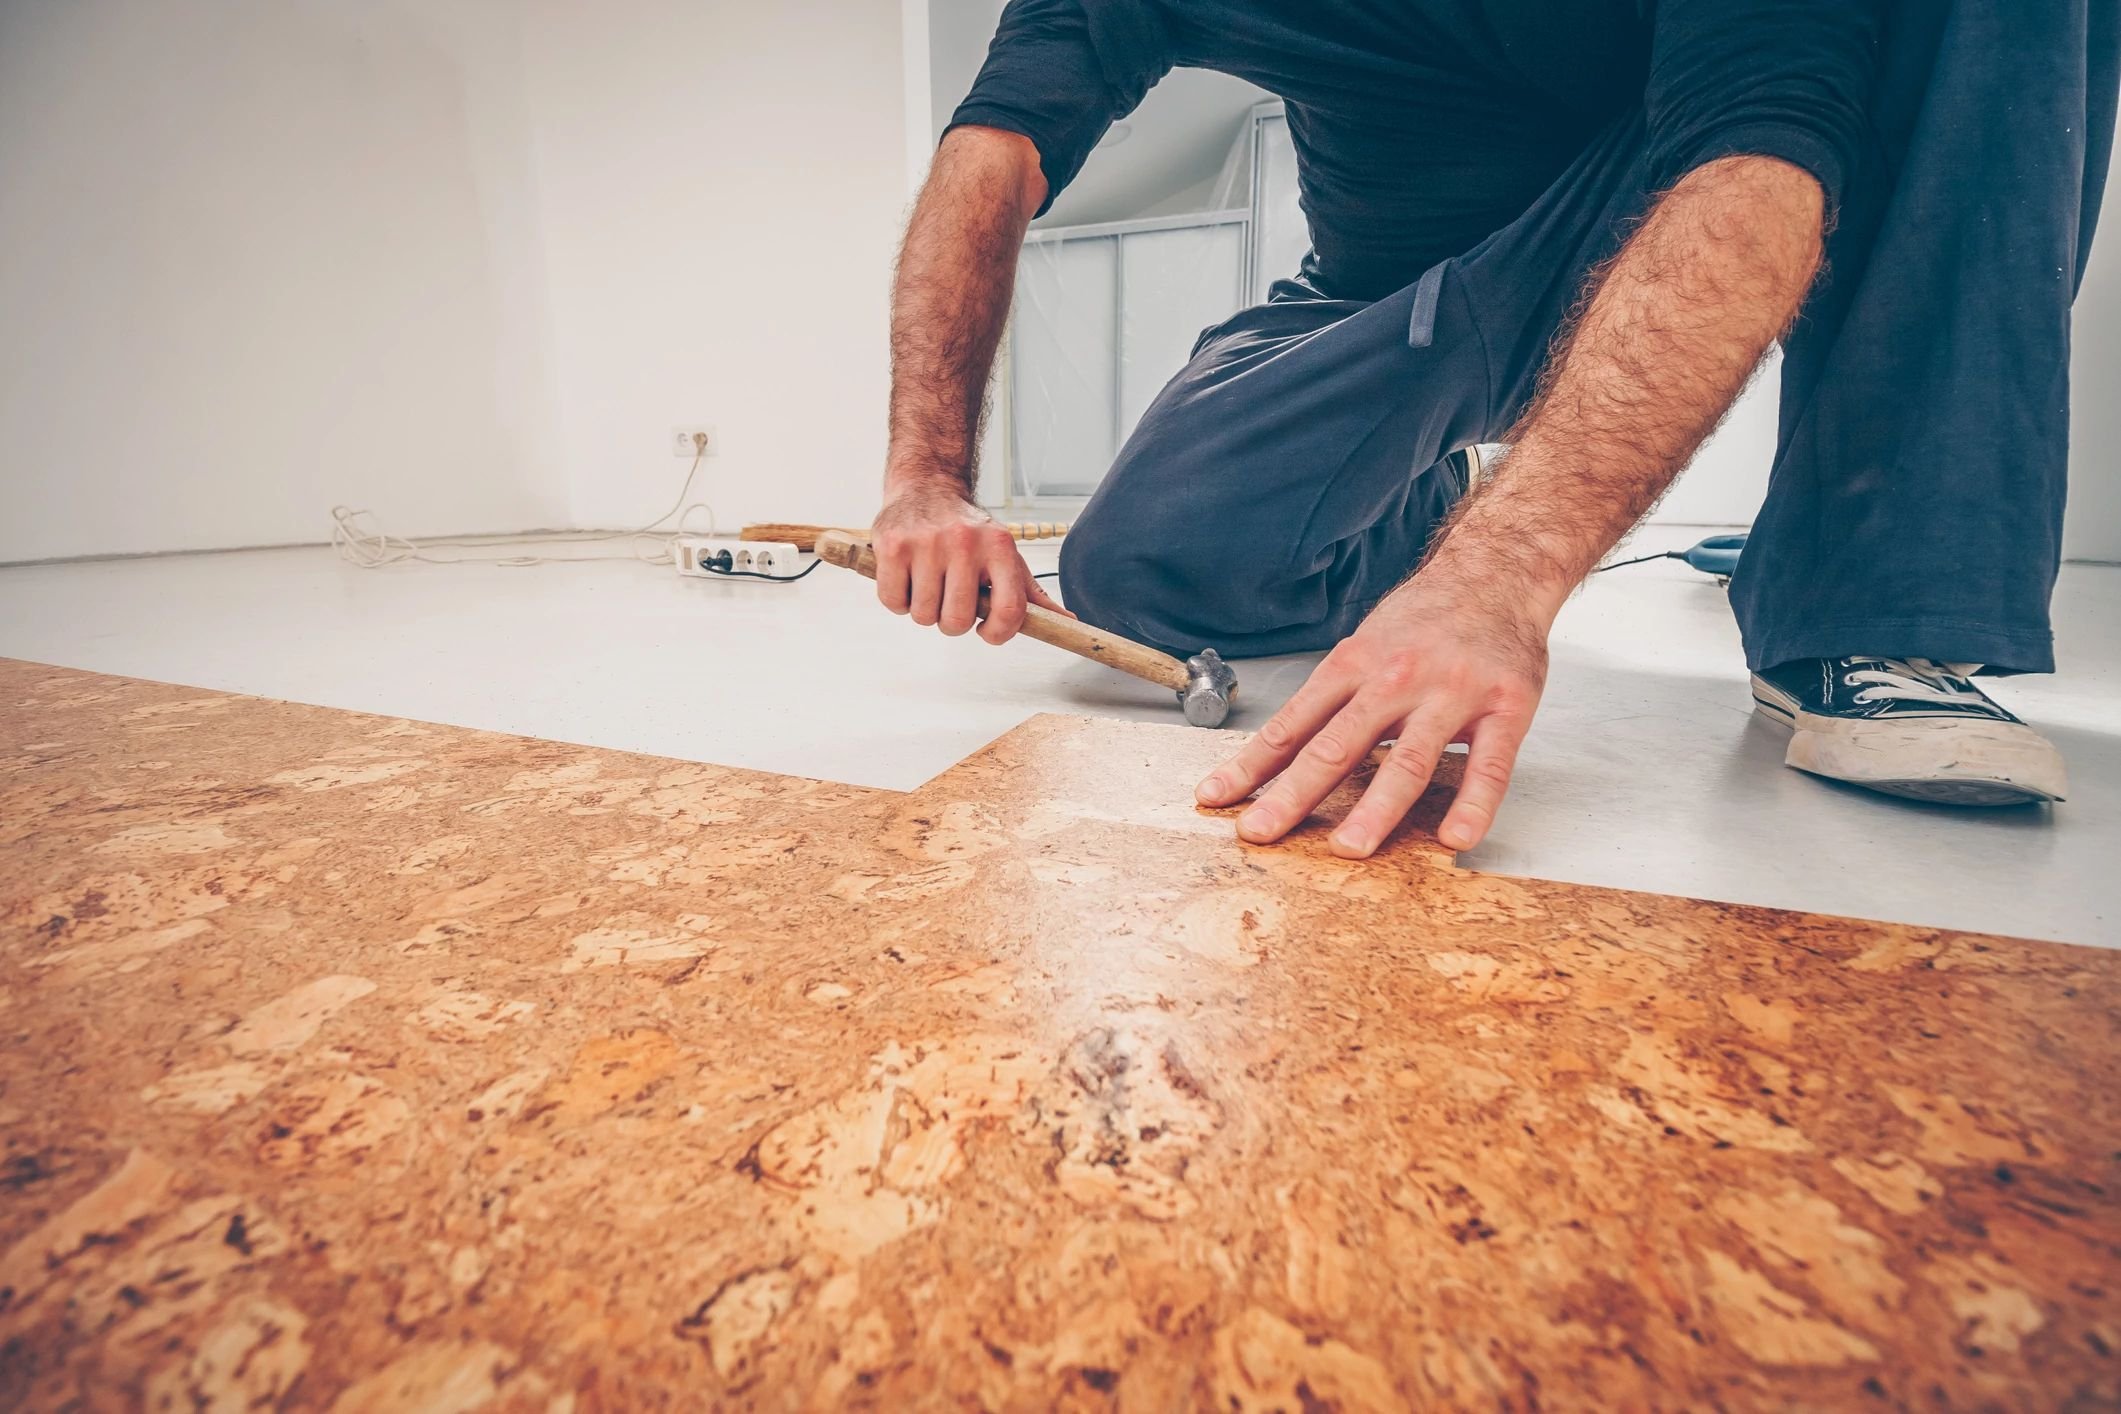 More for home cork installation renovation-2021 Galbraiths Inc. Flooring in Carthage, MO